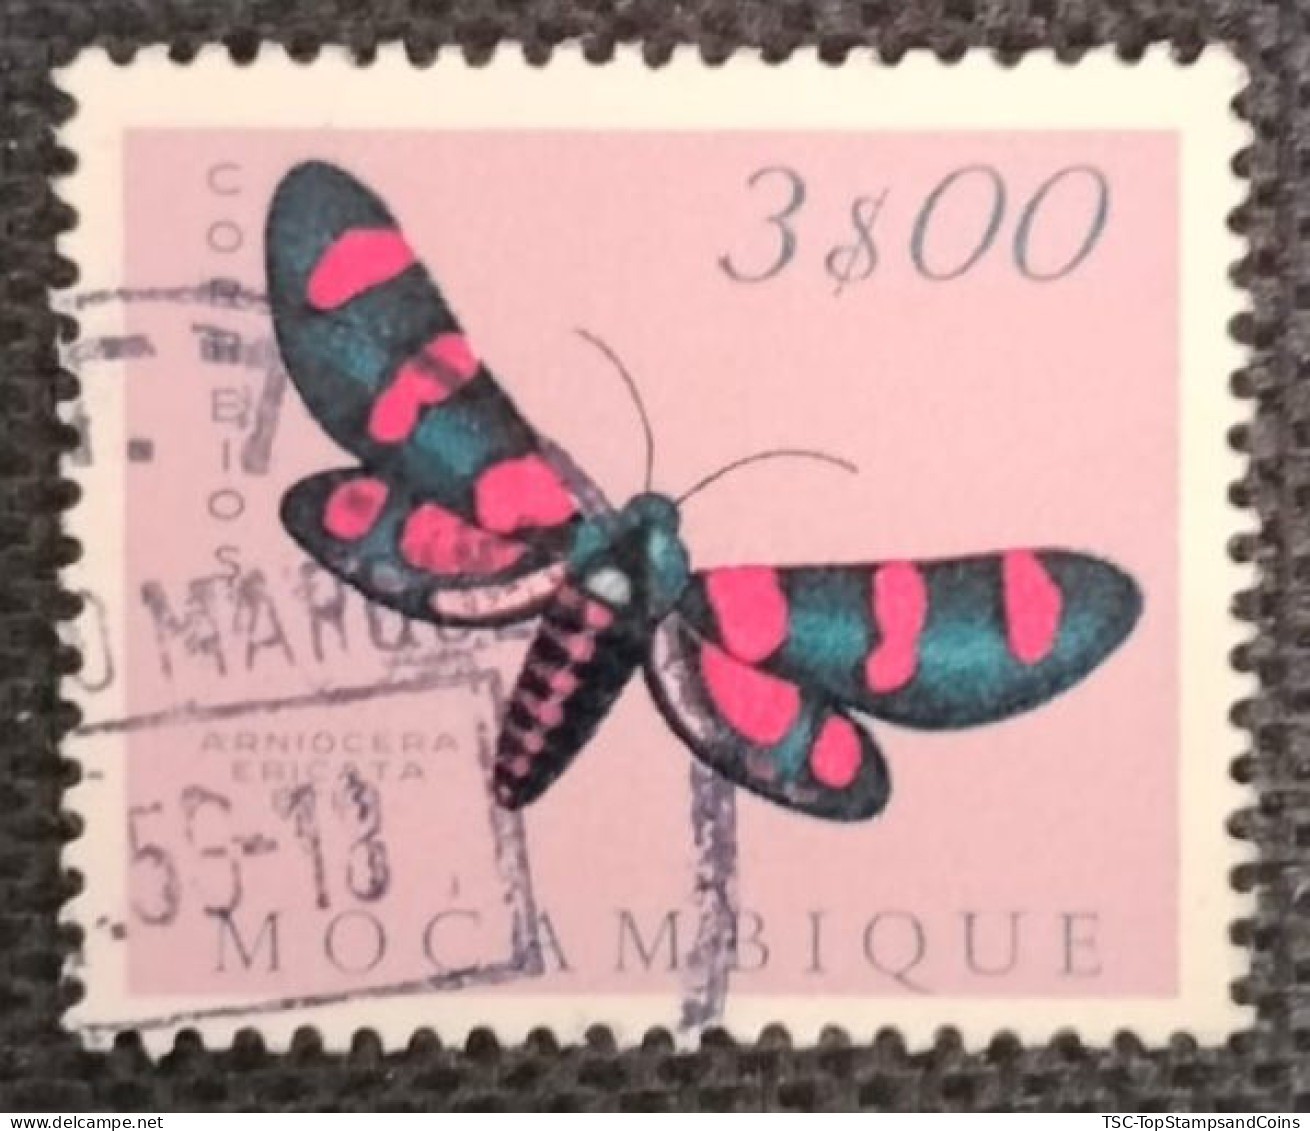 MOZPO0400U7 - Mozambique Butterflies - 3$00 Used Stamp - Mozambique - 1953 - Mozambique